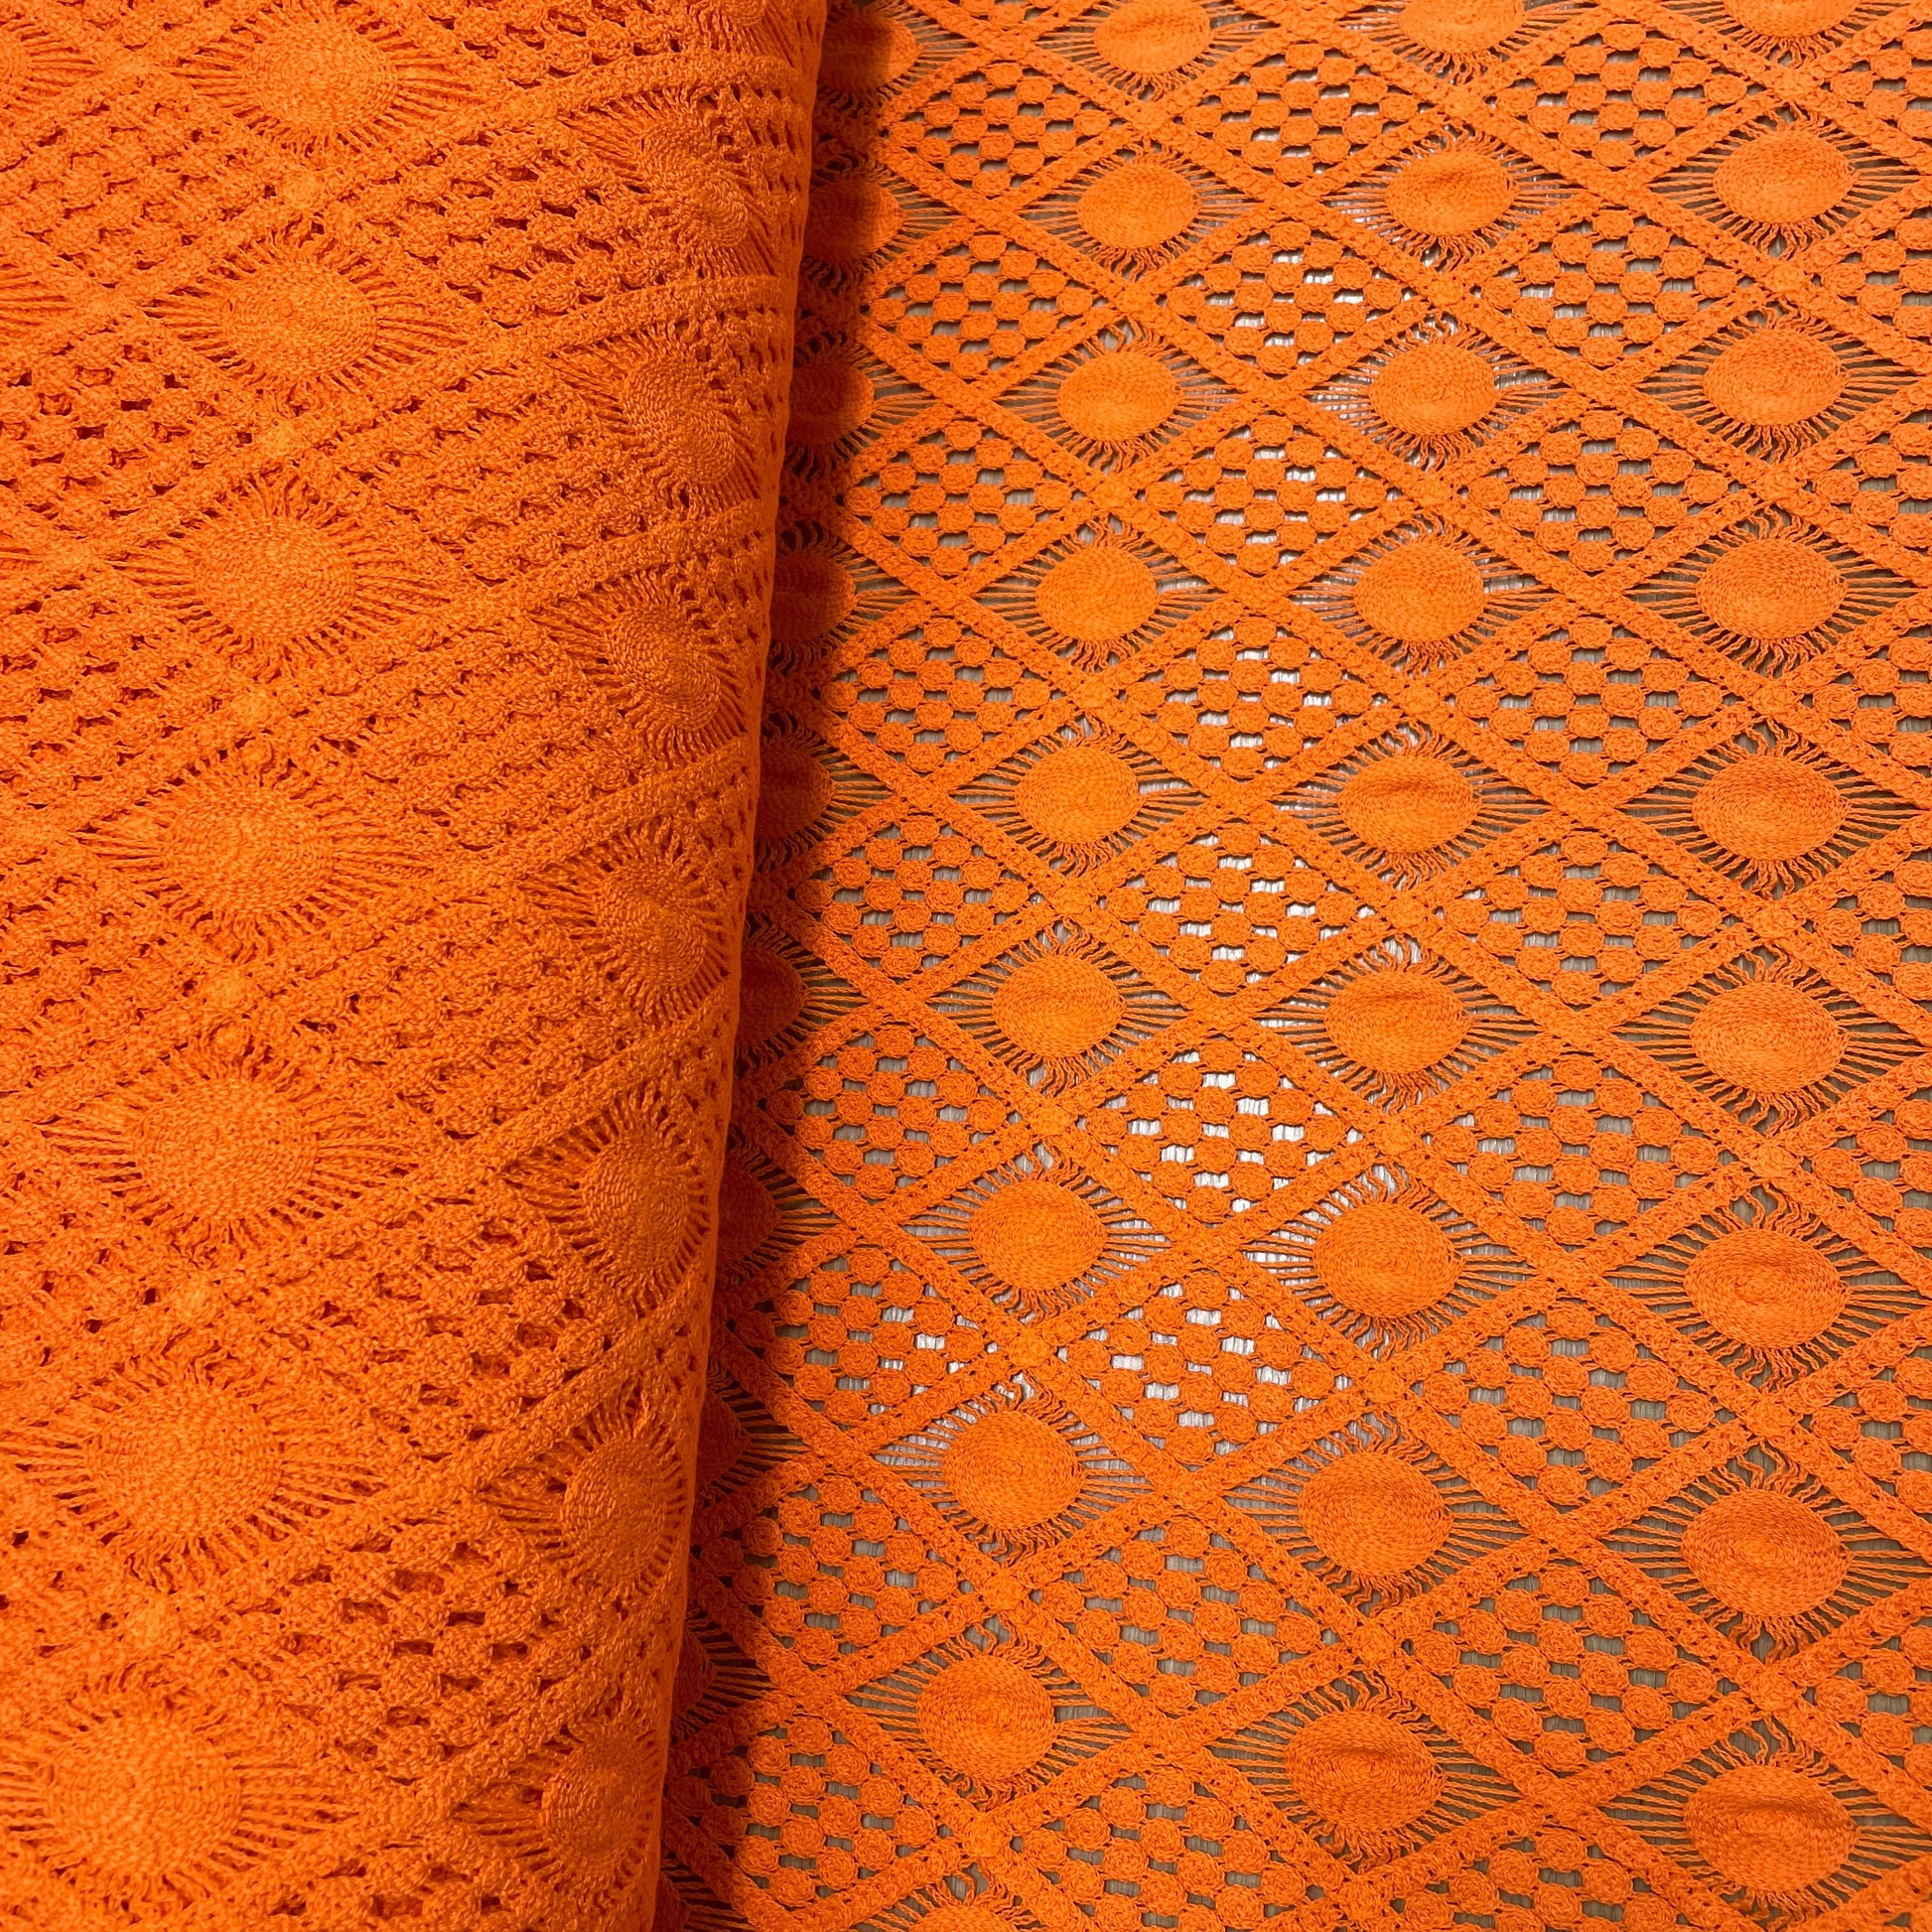 Geomertrical Orange Crochet Fabric